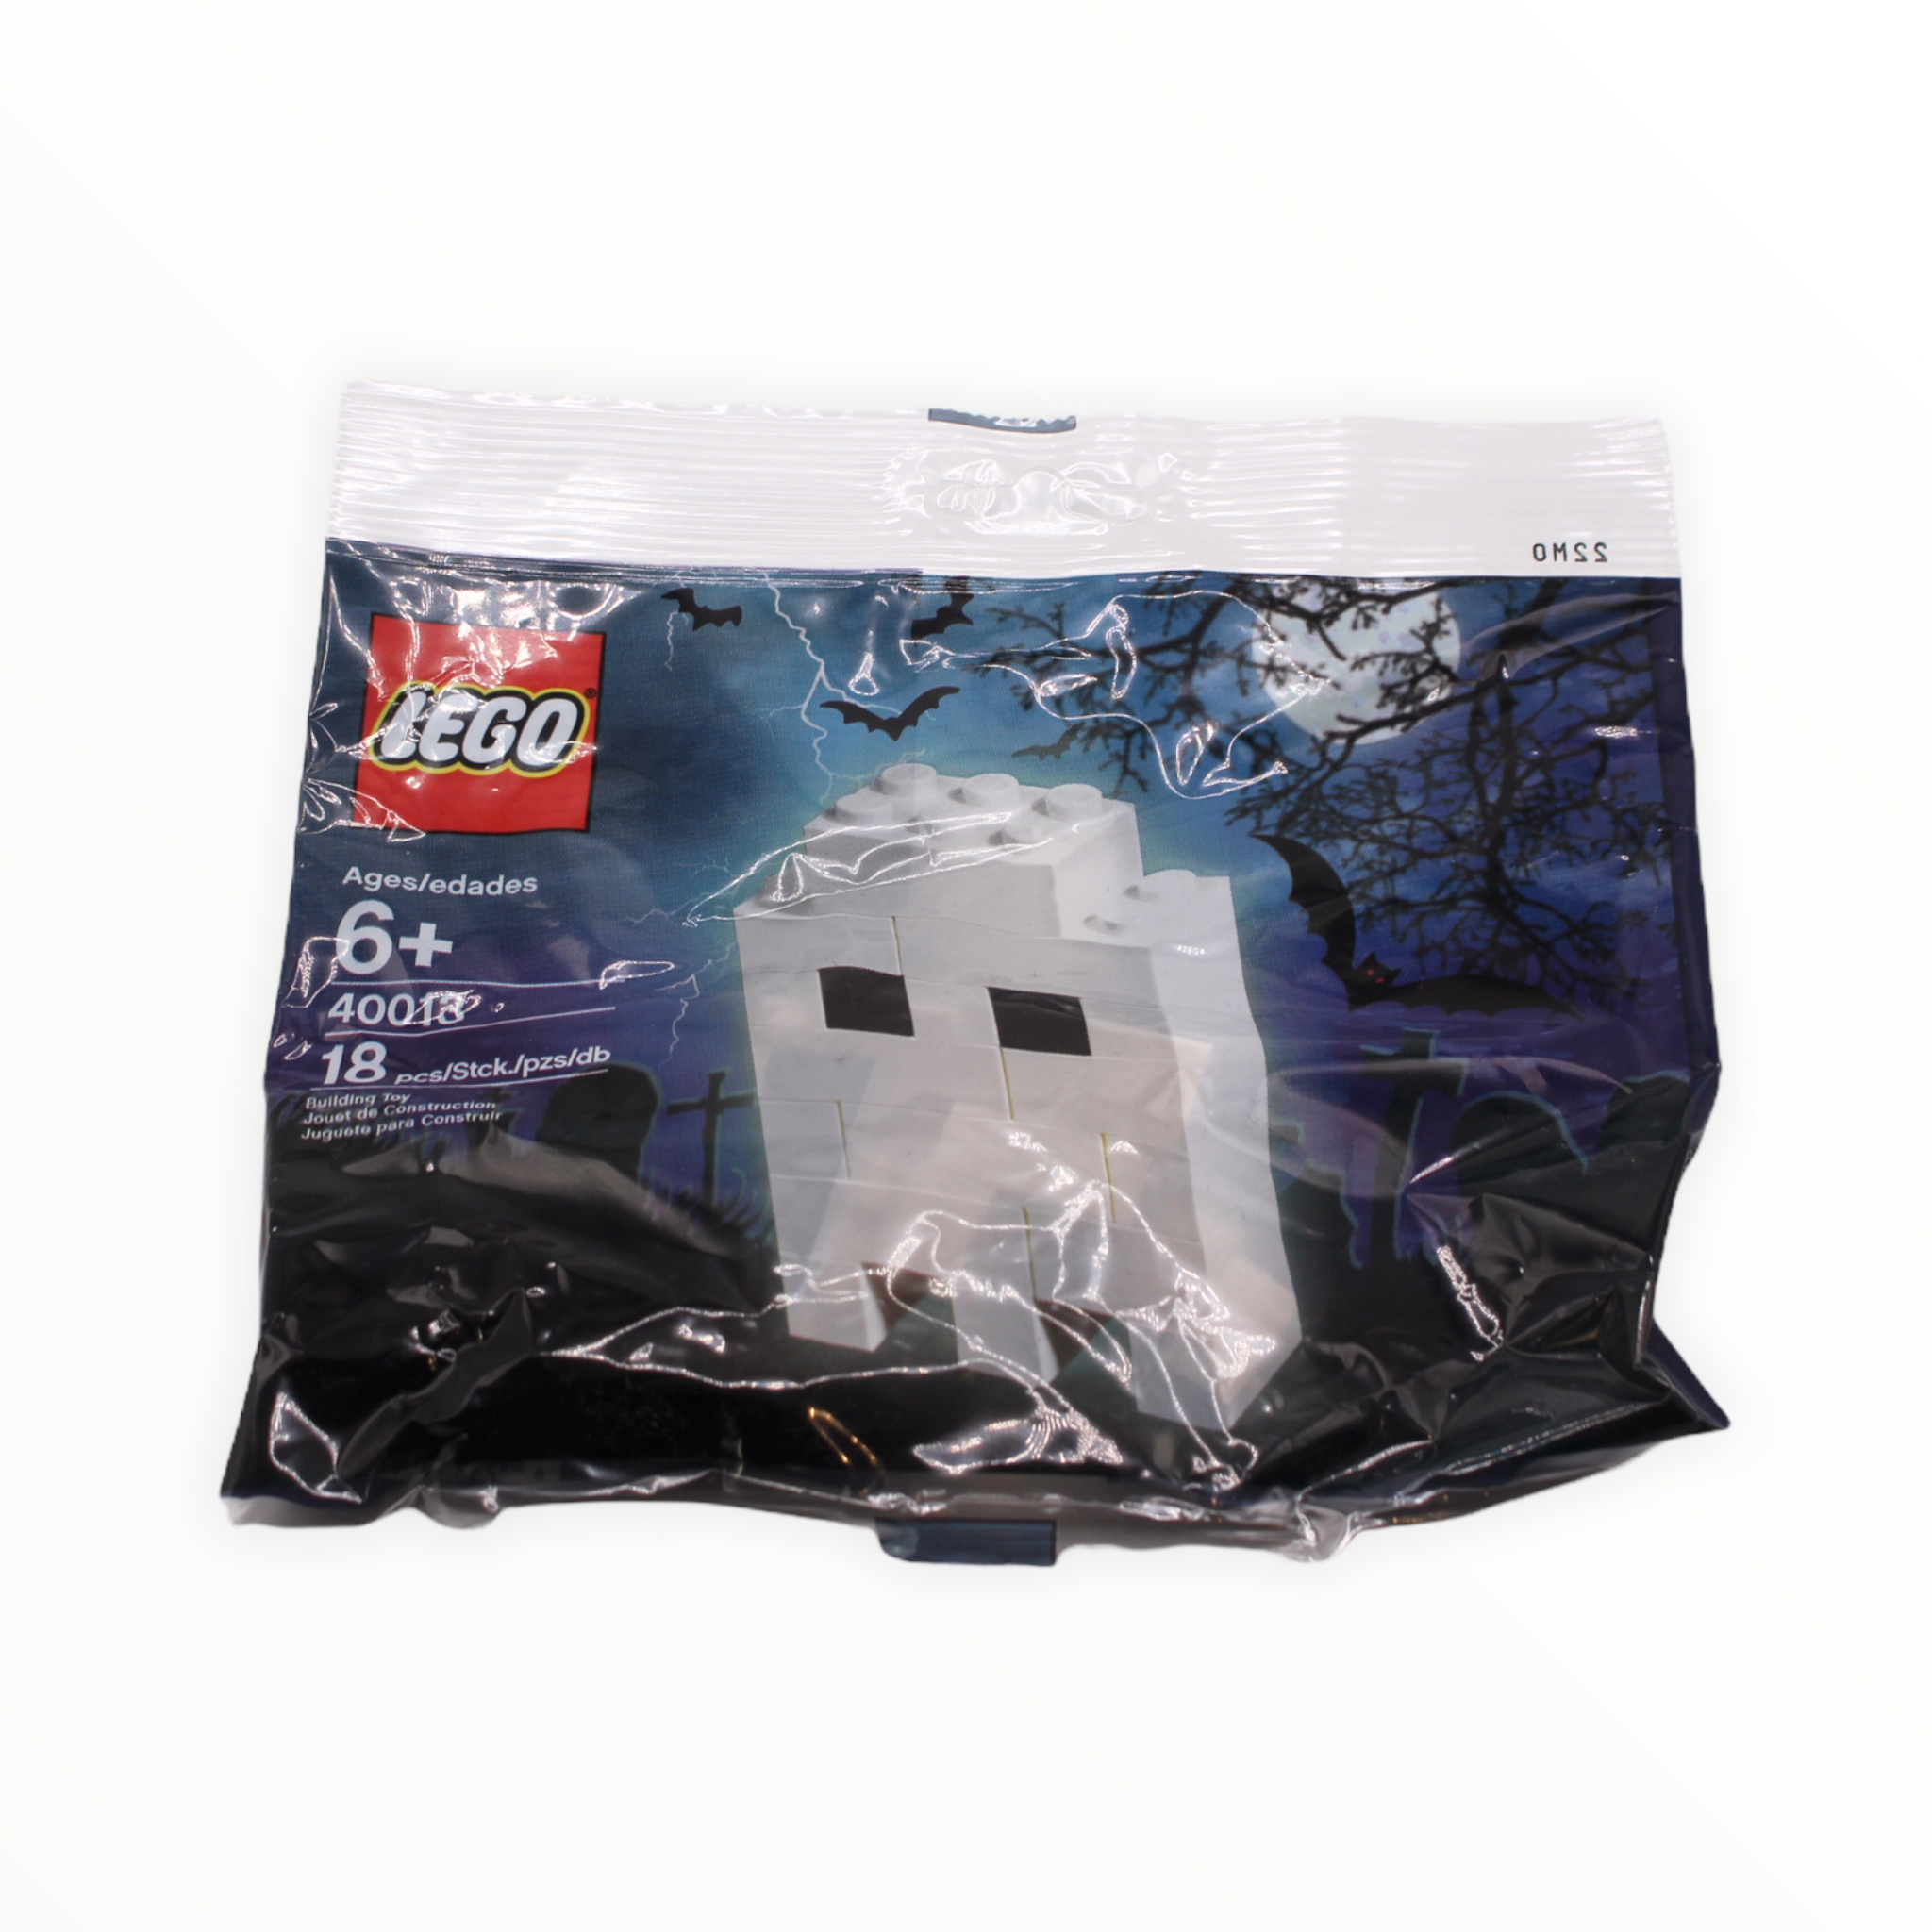 Polybag 40013 LEGO Halloween Ghost